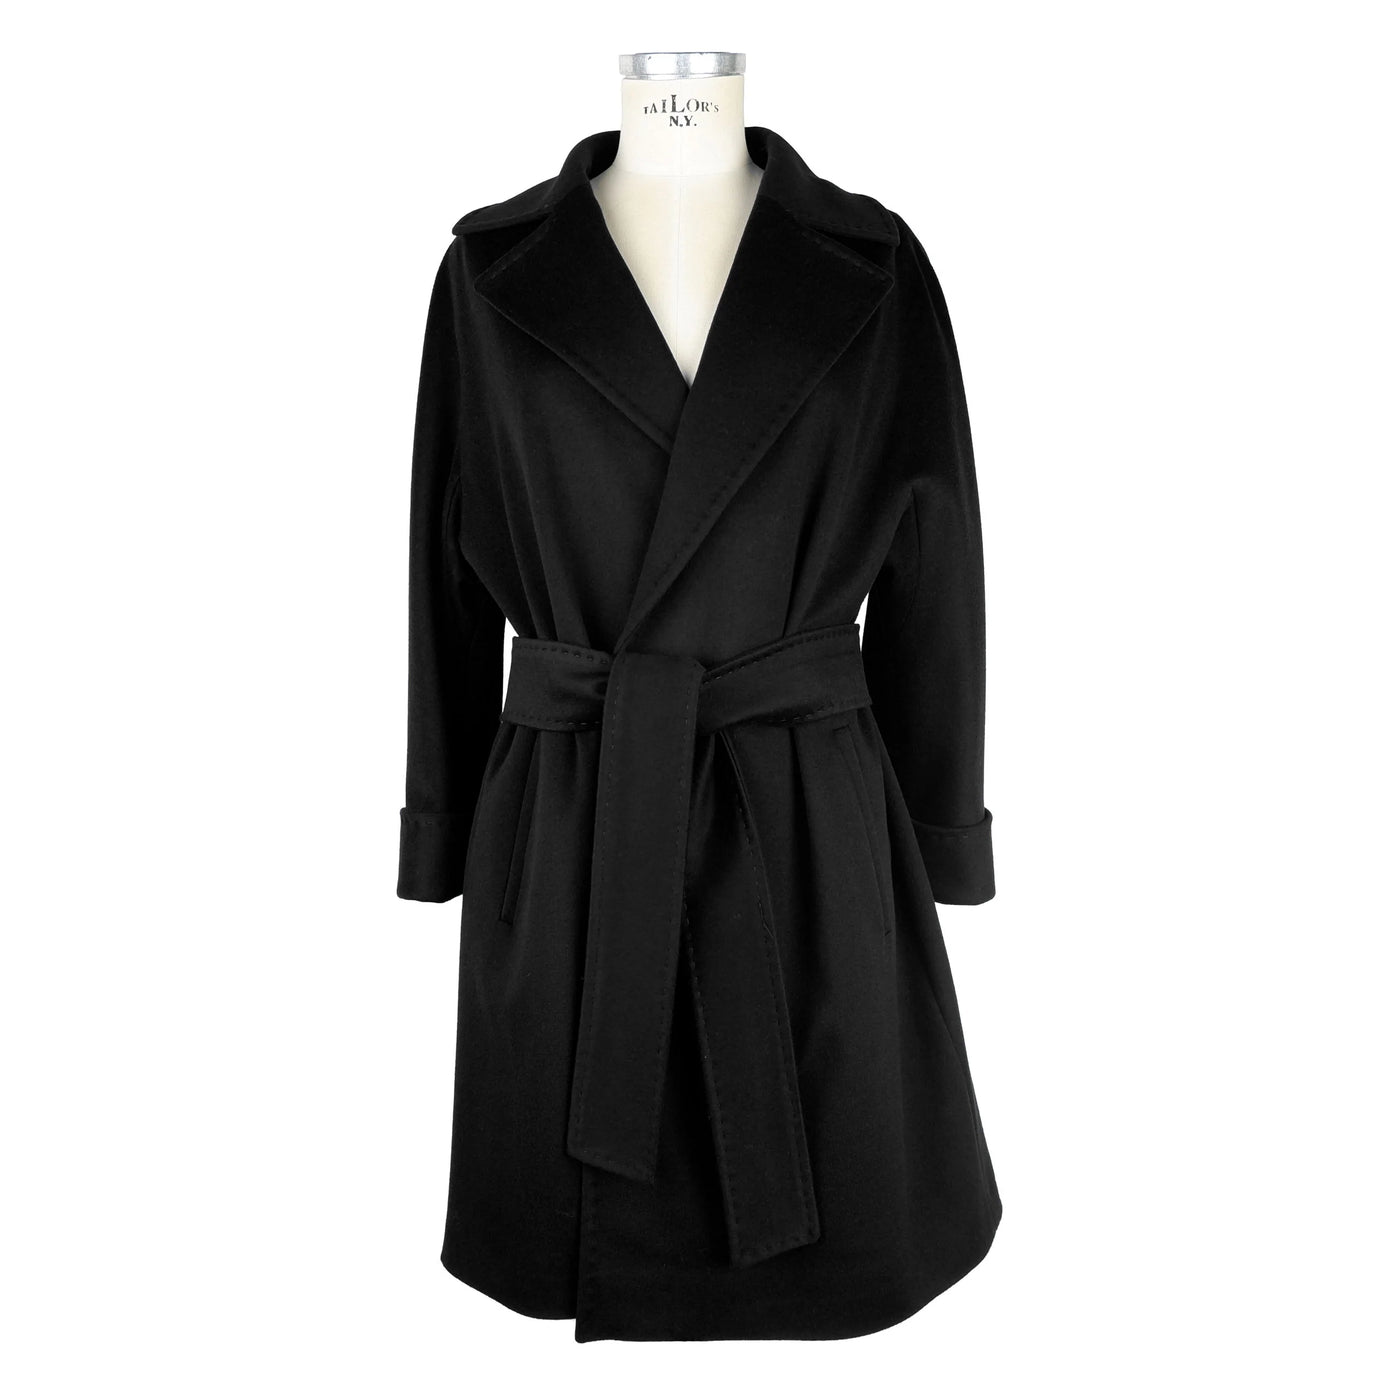 Made in Italy Black Wool Jackets & Coat Black, feed-1, IT40|S, IT42|M, IT44|L, IT46 | L, IT48 | XL, Jackets & Coats - Women - Clothing, Made in Italy at SEYMAYKA